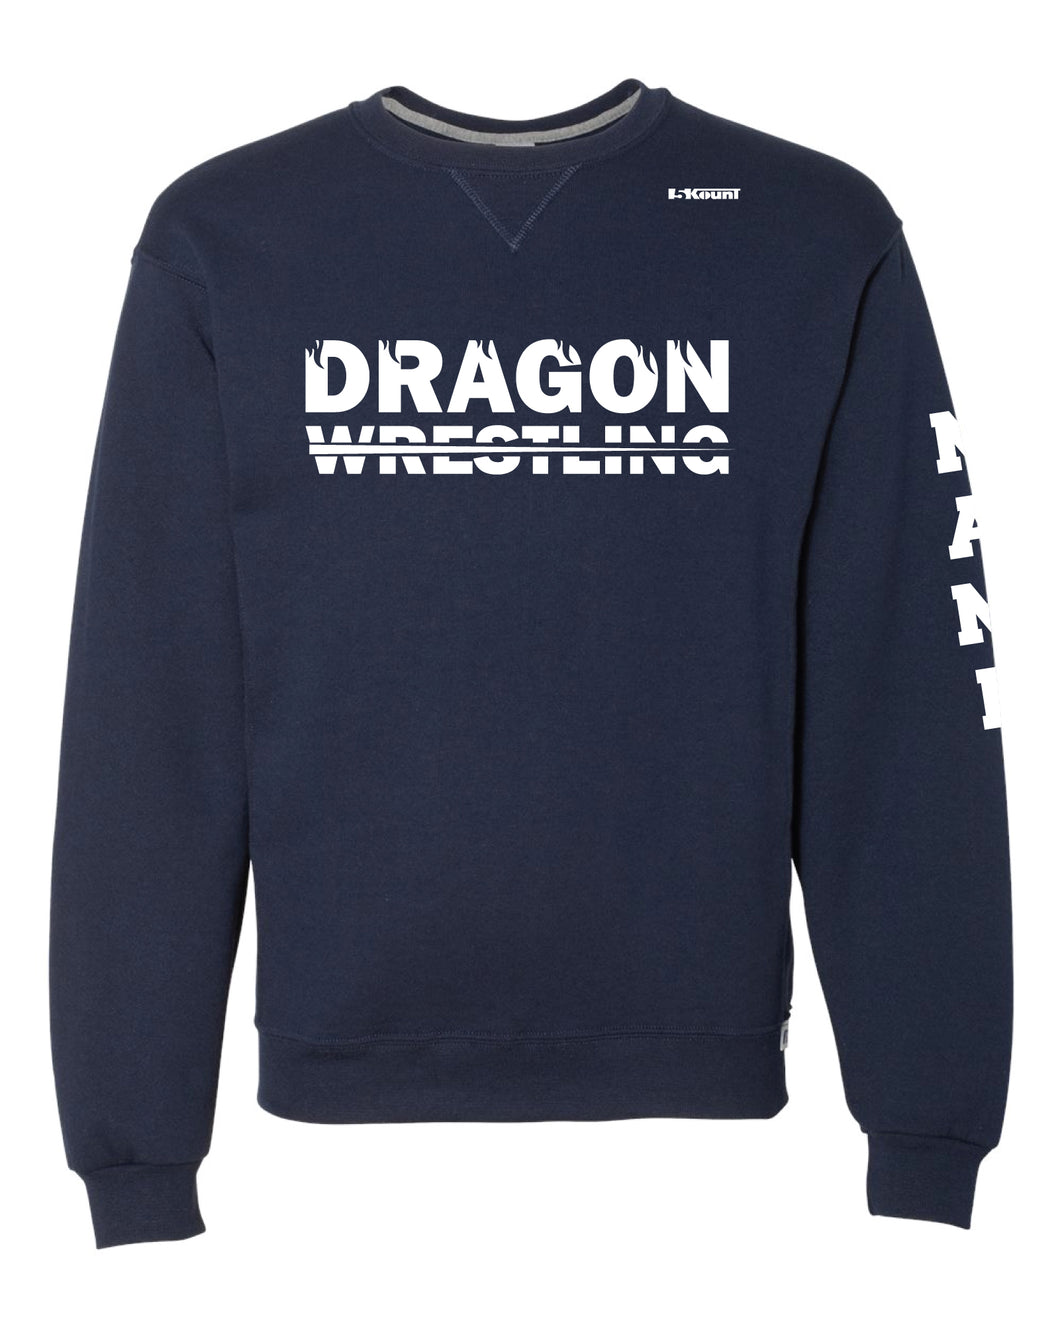 Middletown Dragons Russell Athletic Cotton Crewneck Sweatshirt - Navy - 5KounT2018